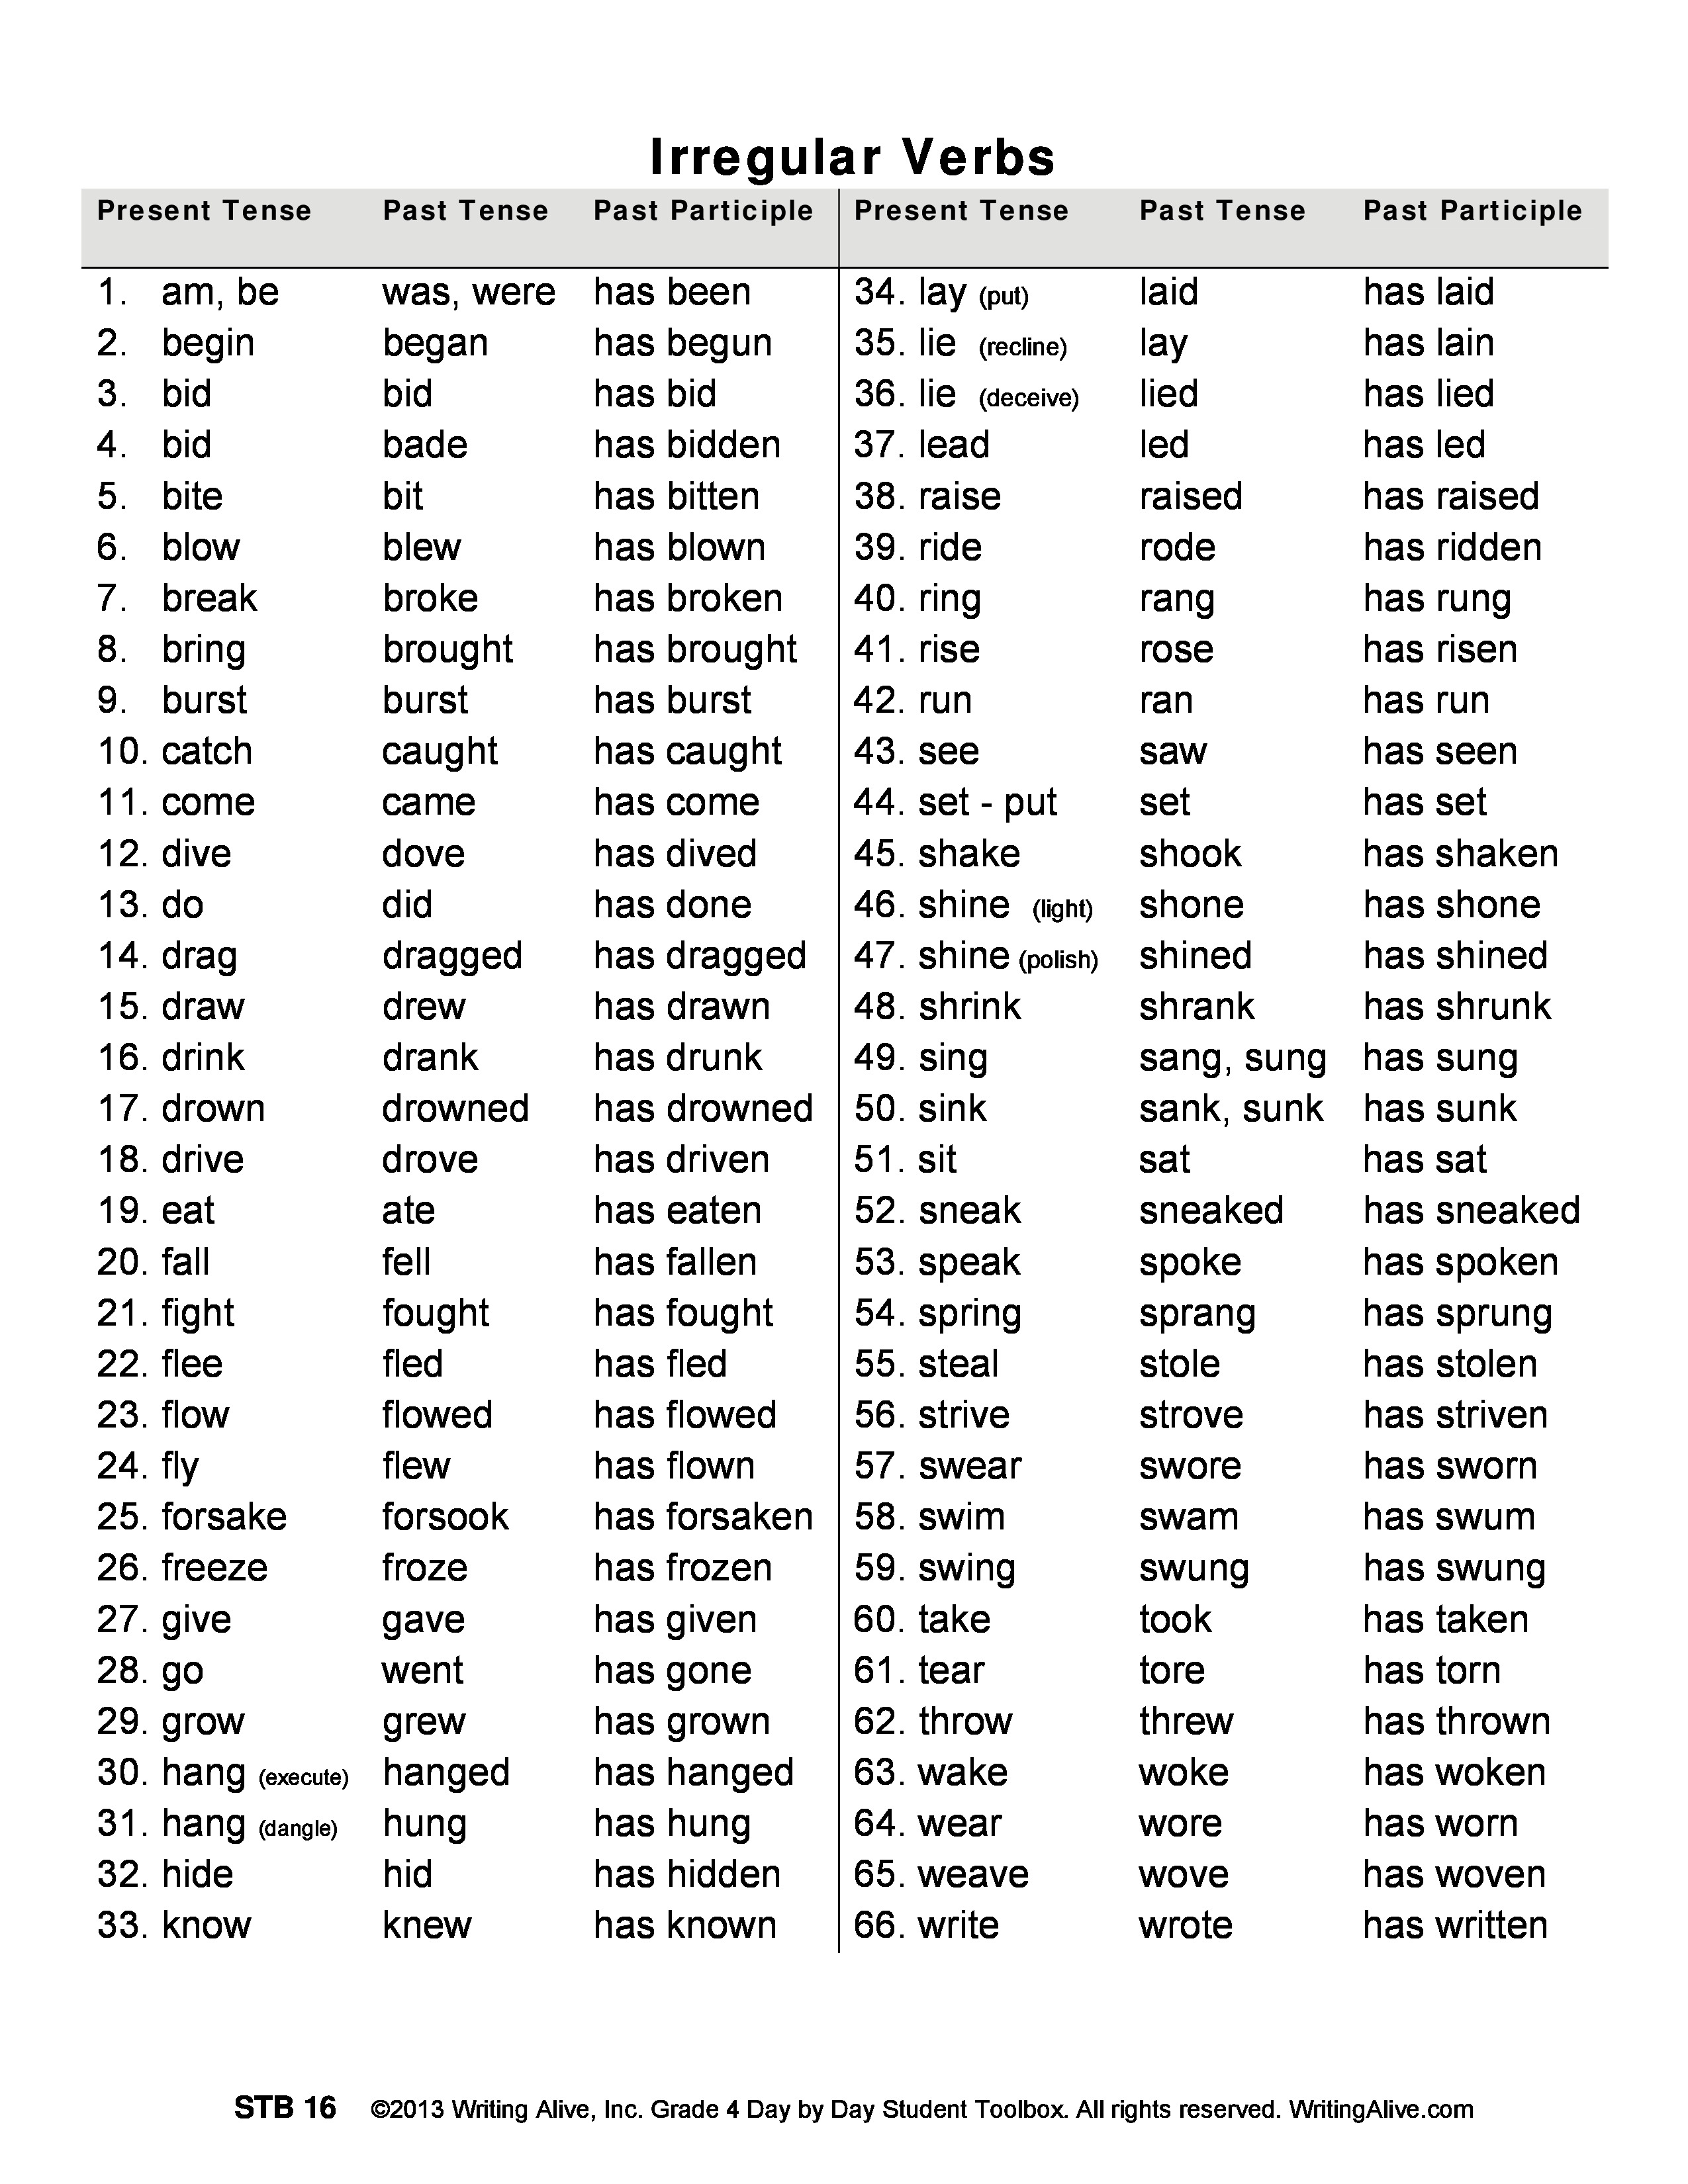 principal-parts-of-irregular-verbs-powerpoint-5th-grade-irregular